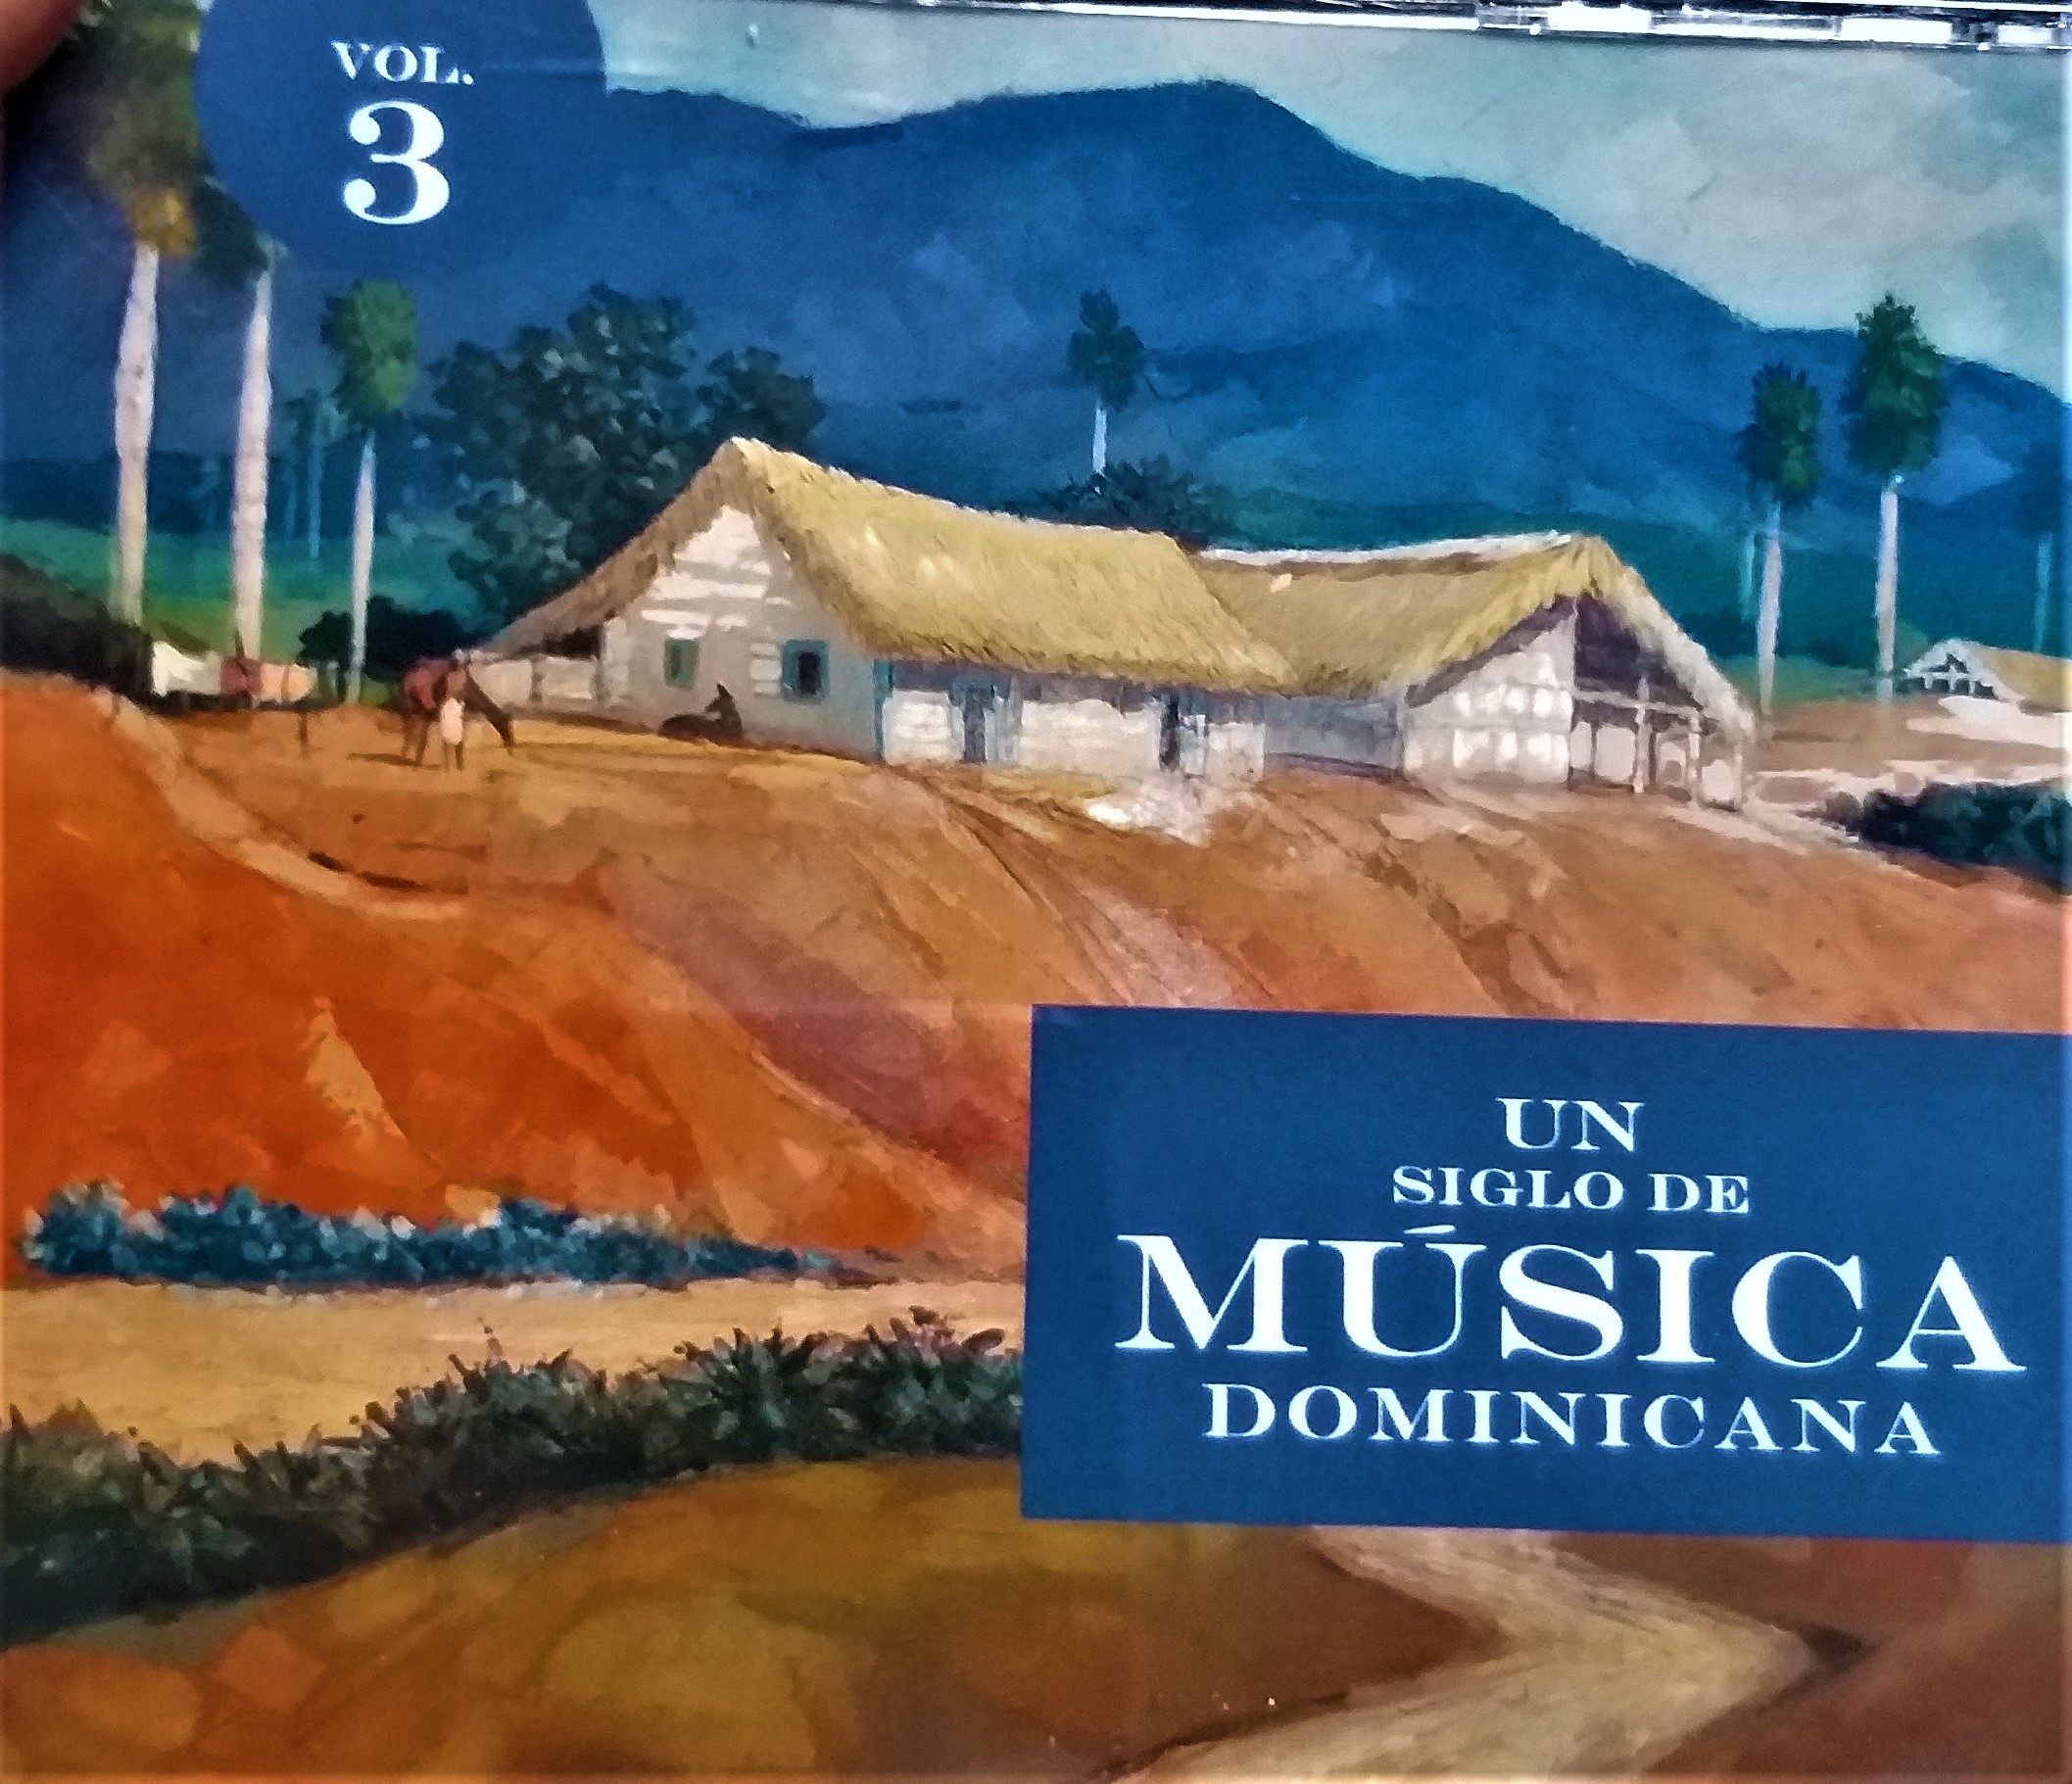 Refidomsa aportó a la preservación de la música dominicana